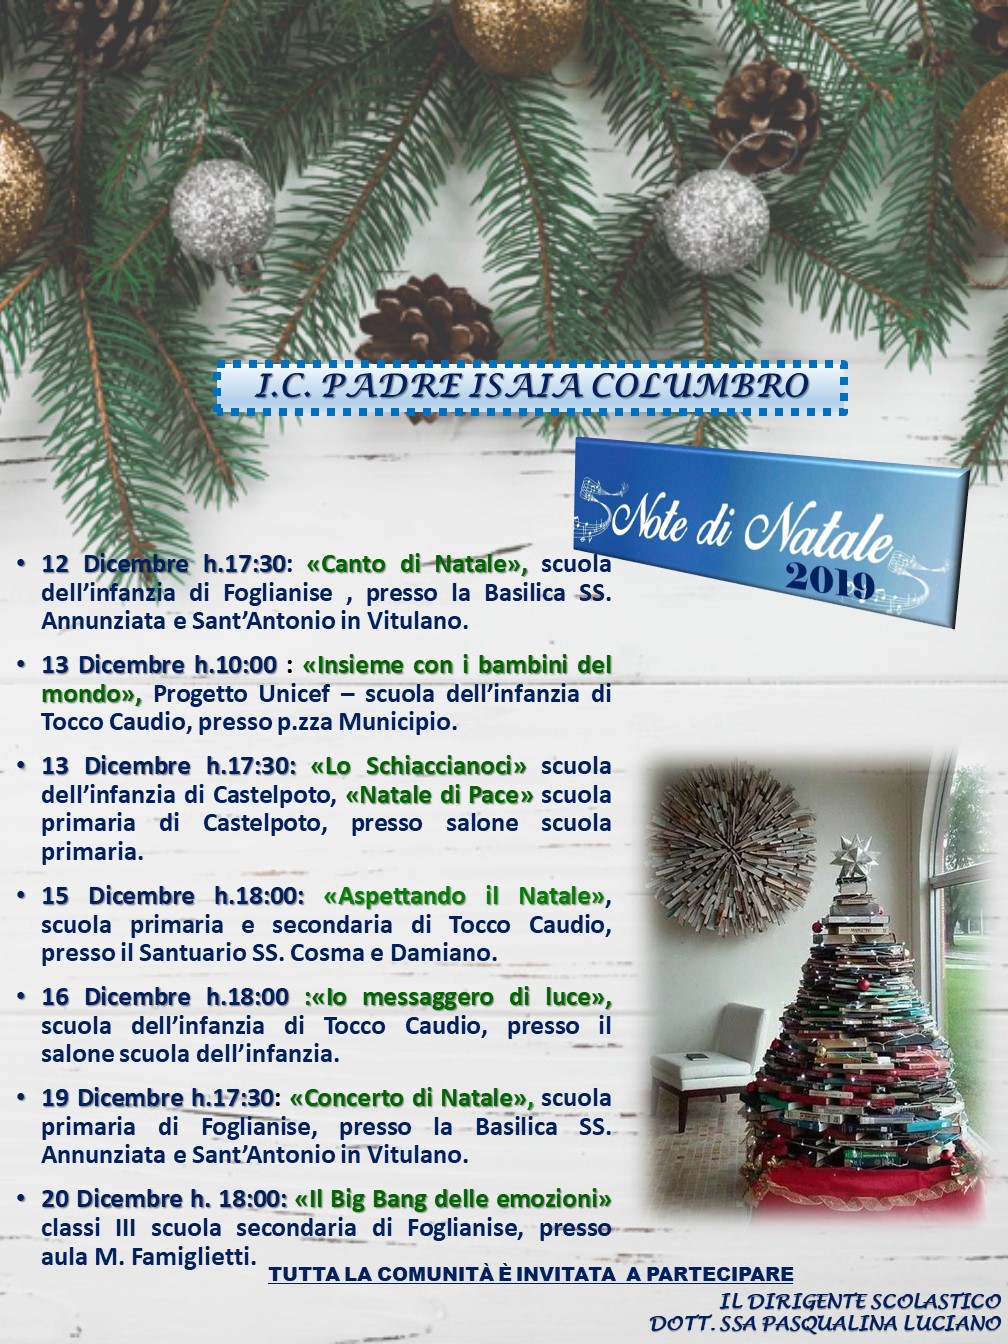 Poesie Di Natale Scuola Primaria Classe Quinta.Eventi E Attivita Didattiche Website Www Icpadreisaia Edu It